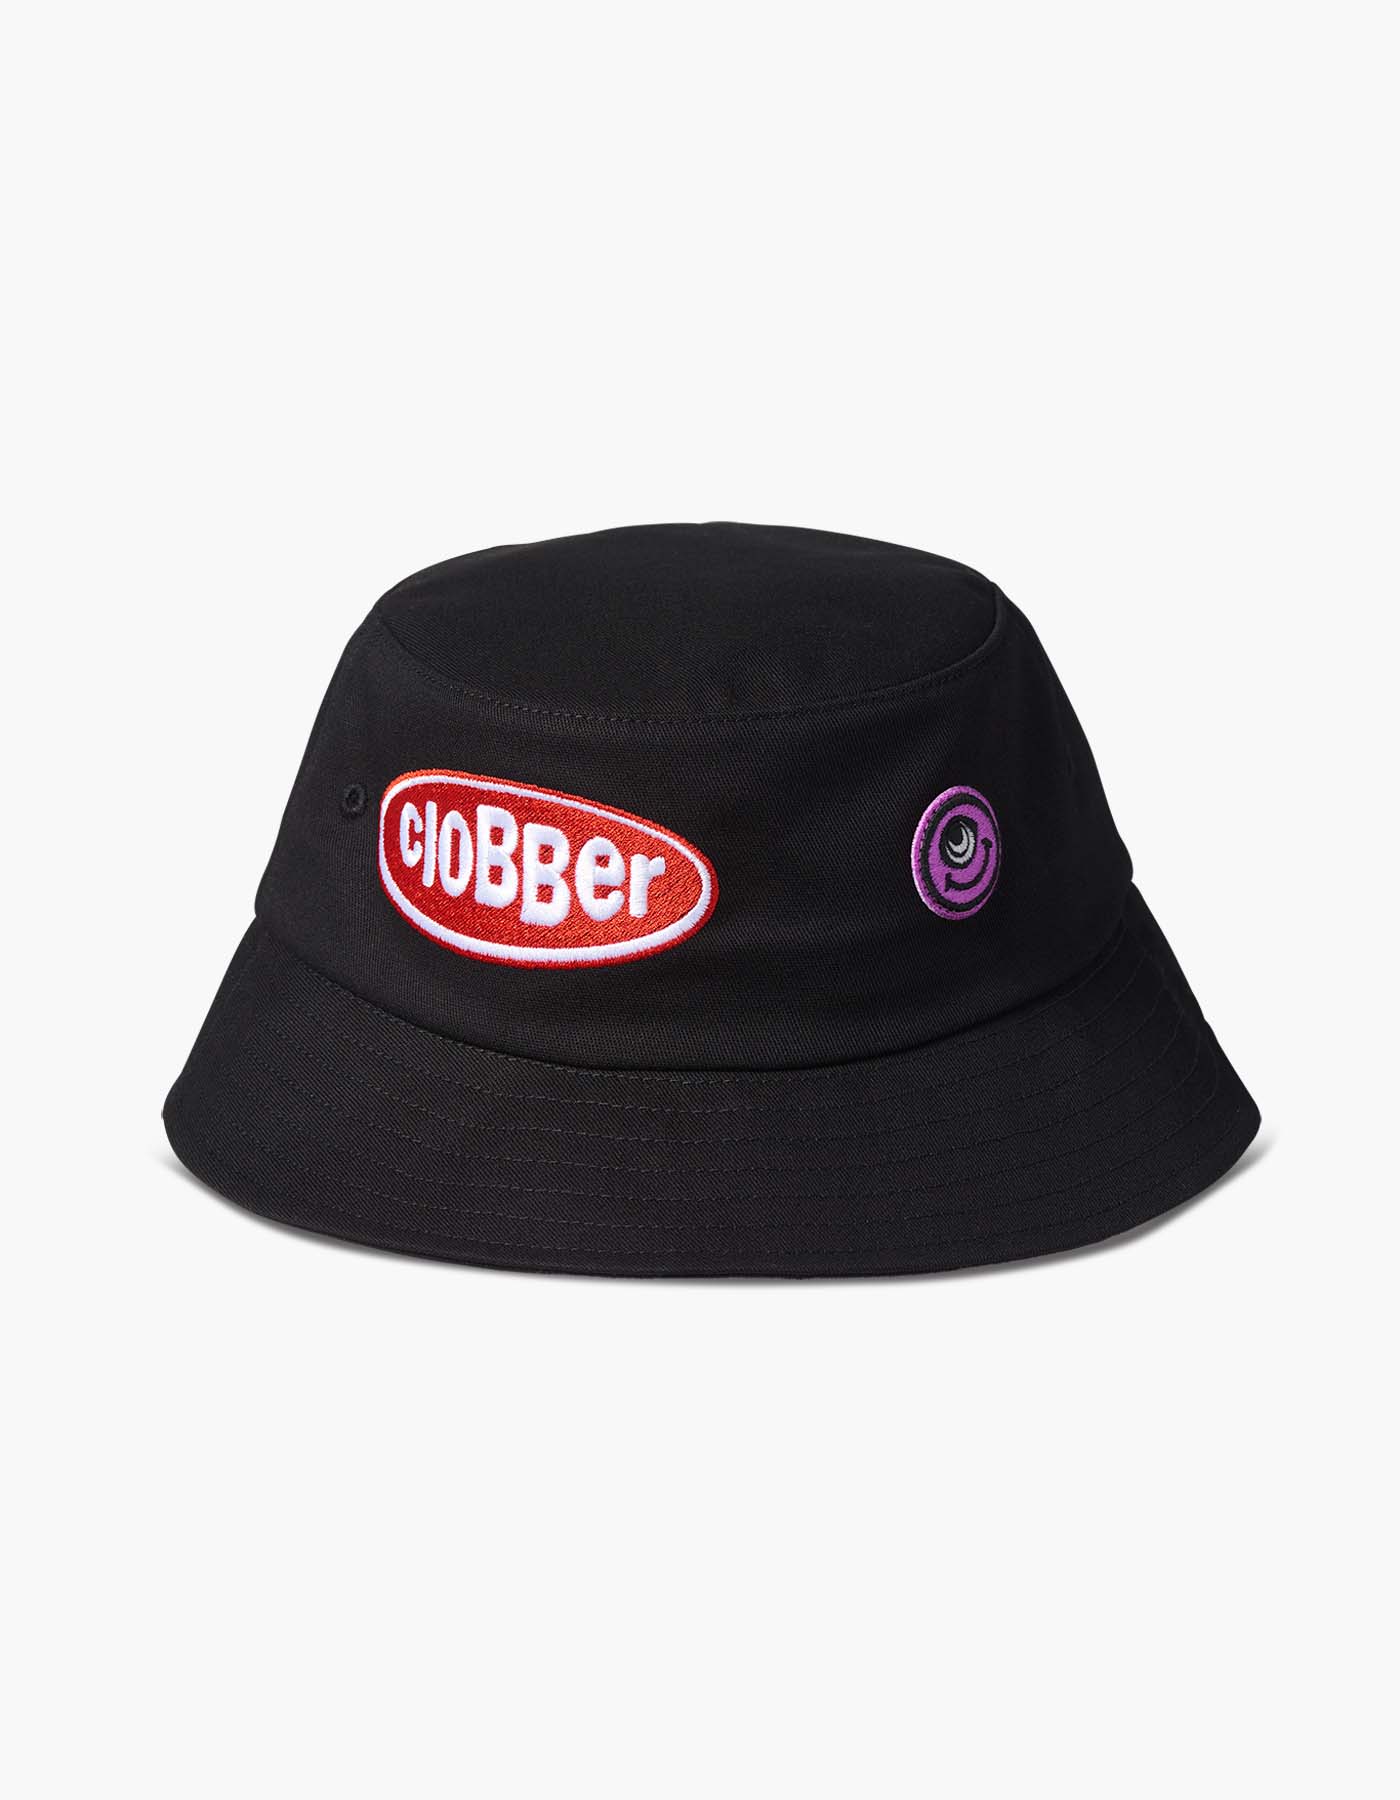 Clobber Test Print Hat